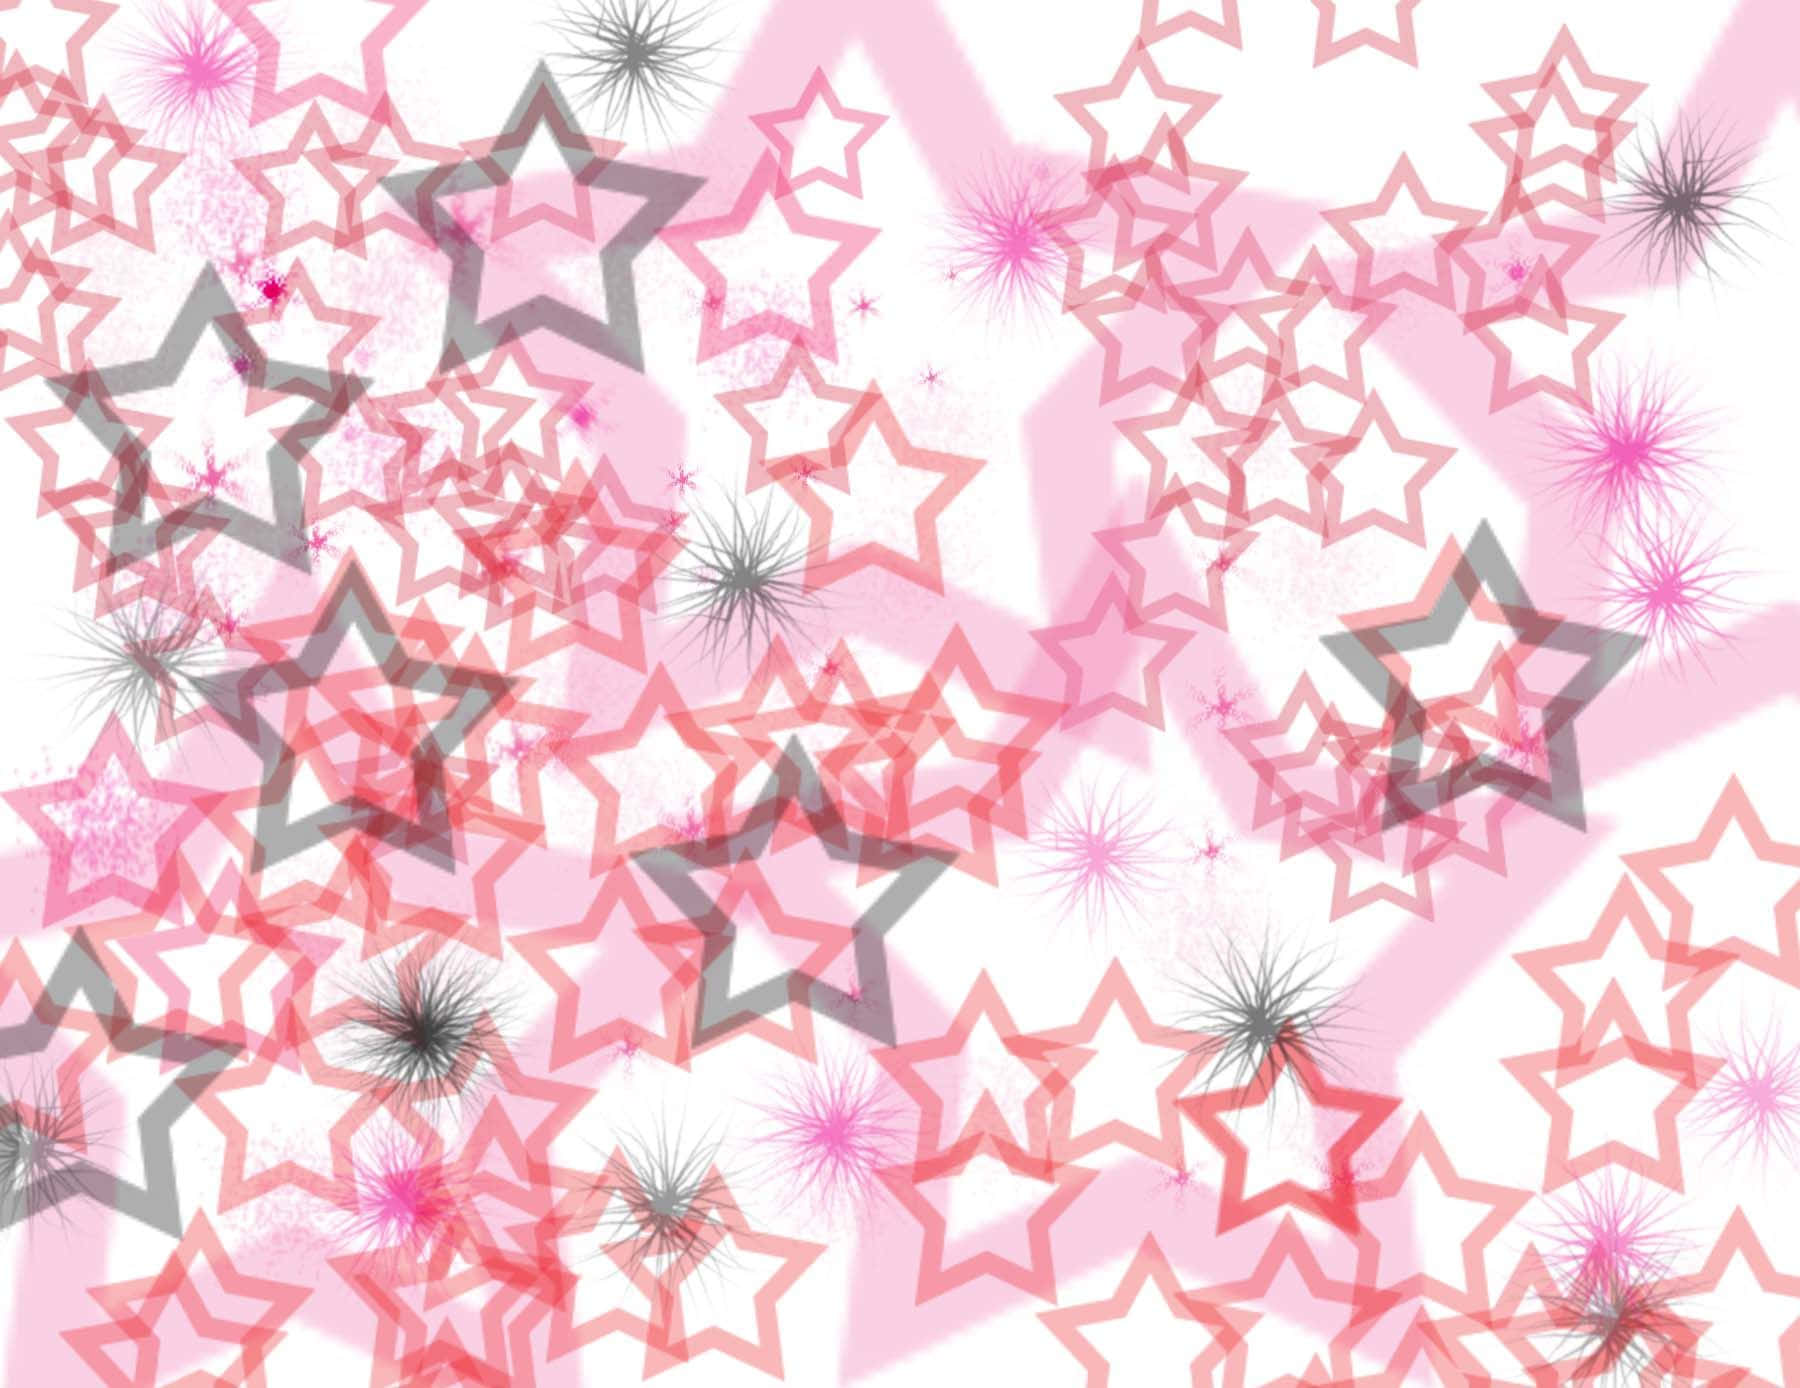 Dreamy Pink Stars In The Night Sky